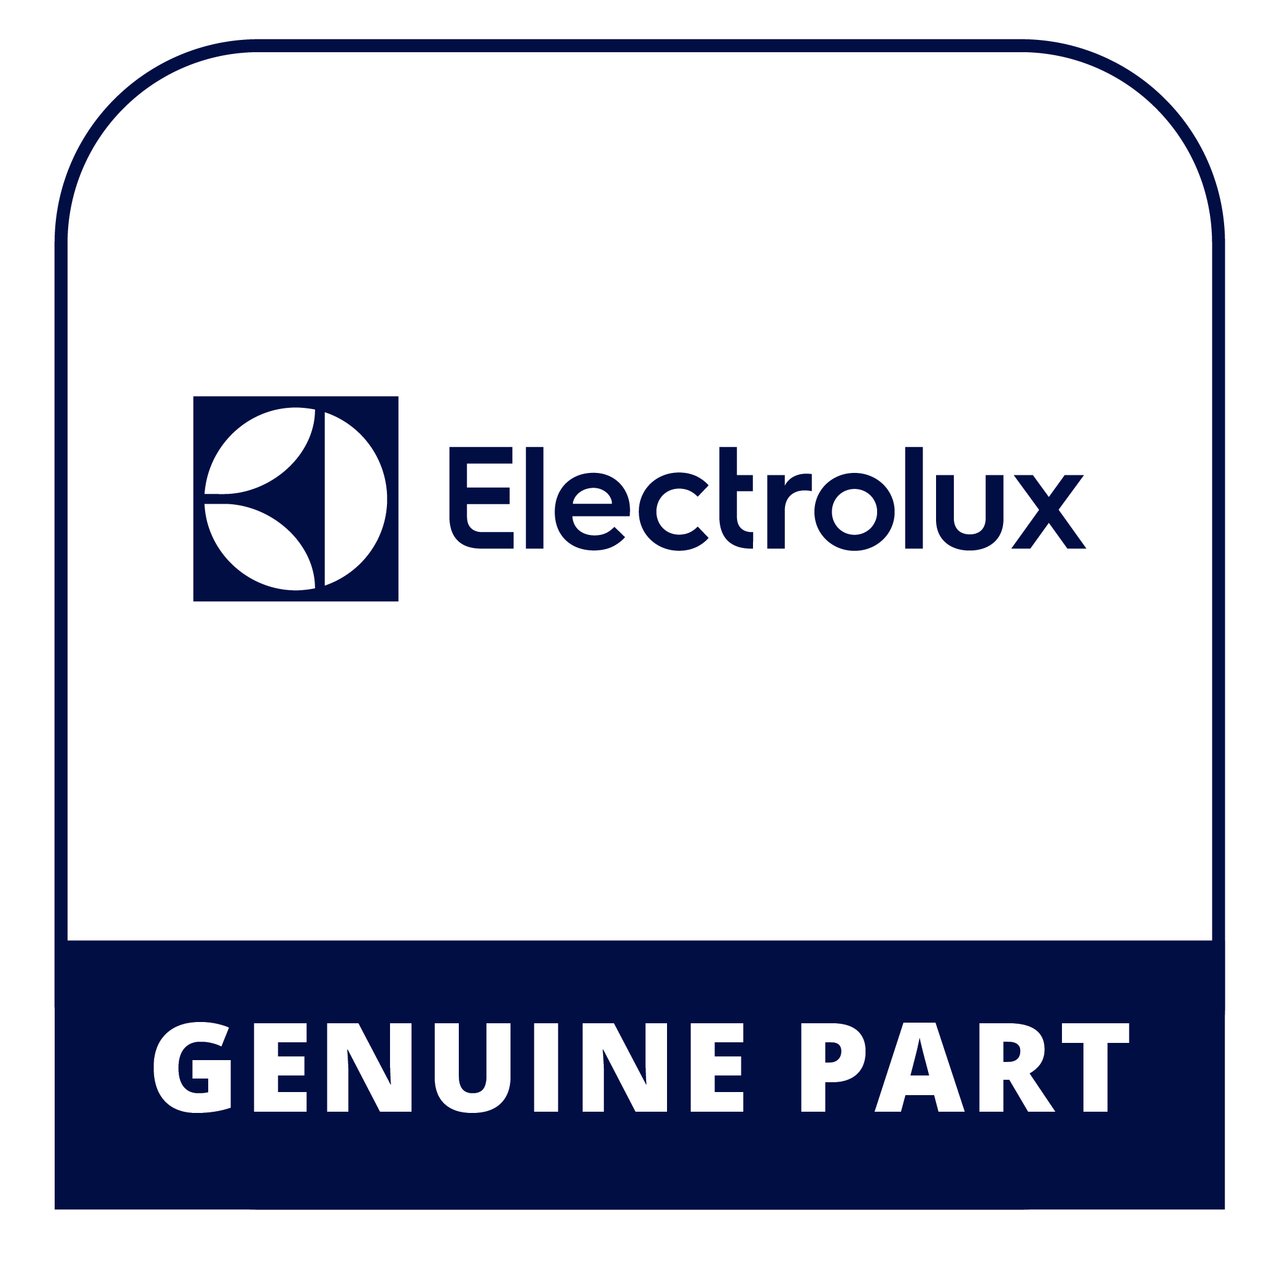 Frigidaire - Electrolux 5304498693 Lamp Holder - Genuine Electrolux Part